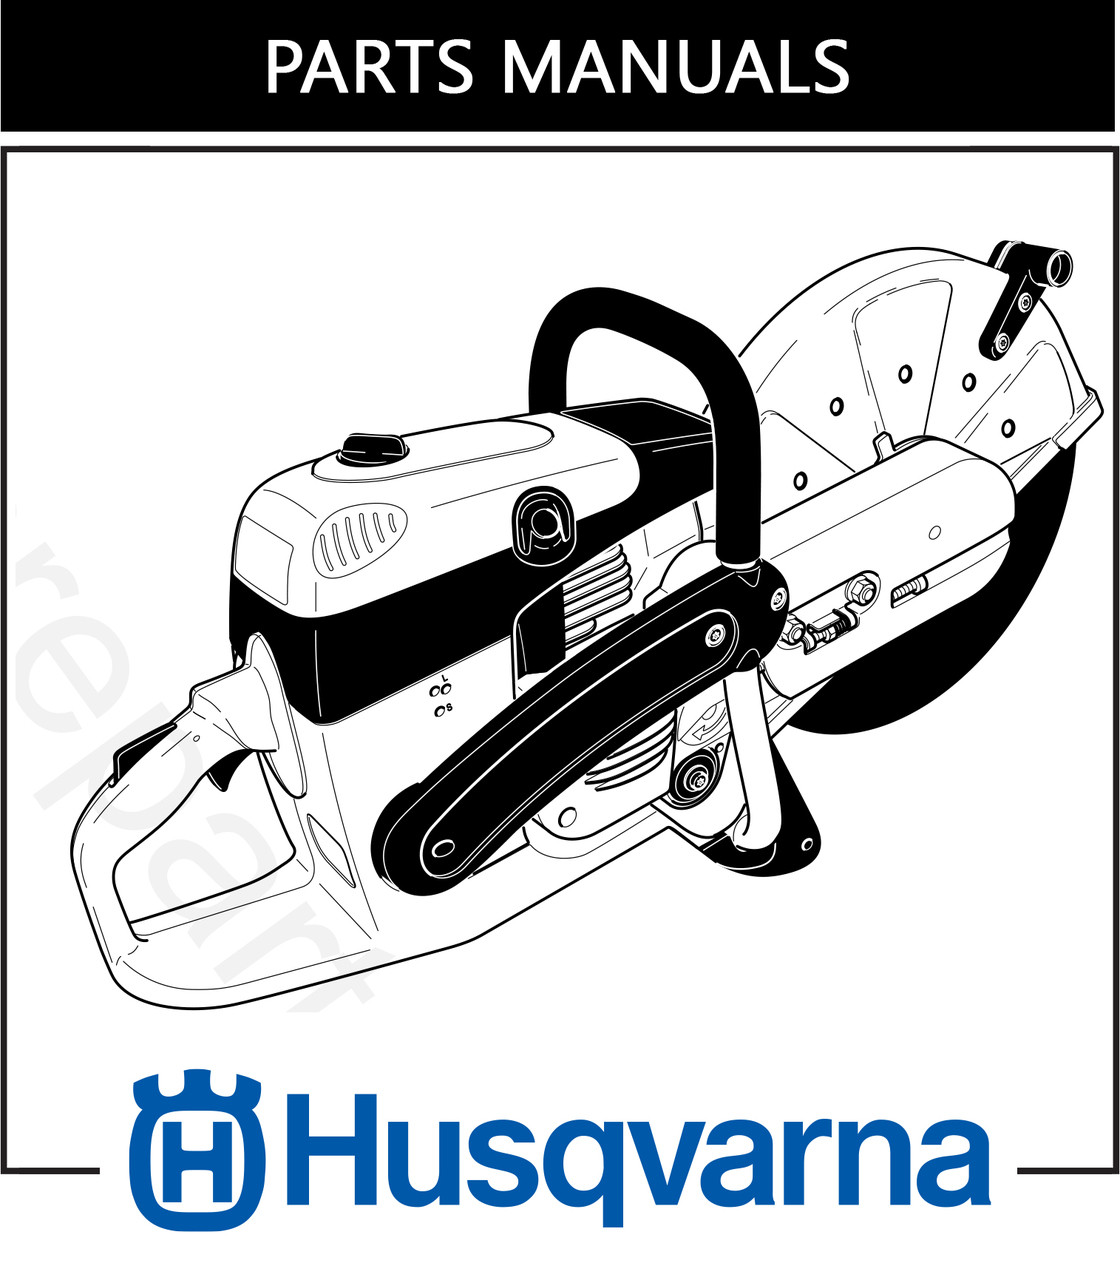 Parts Manual Husqvarna K760 Free Download DHS Equipment